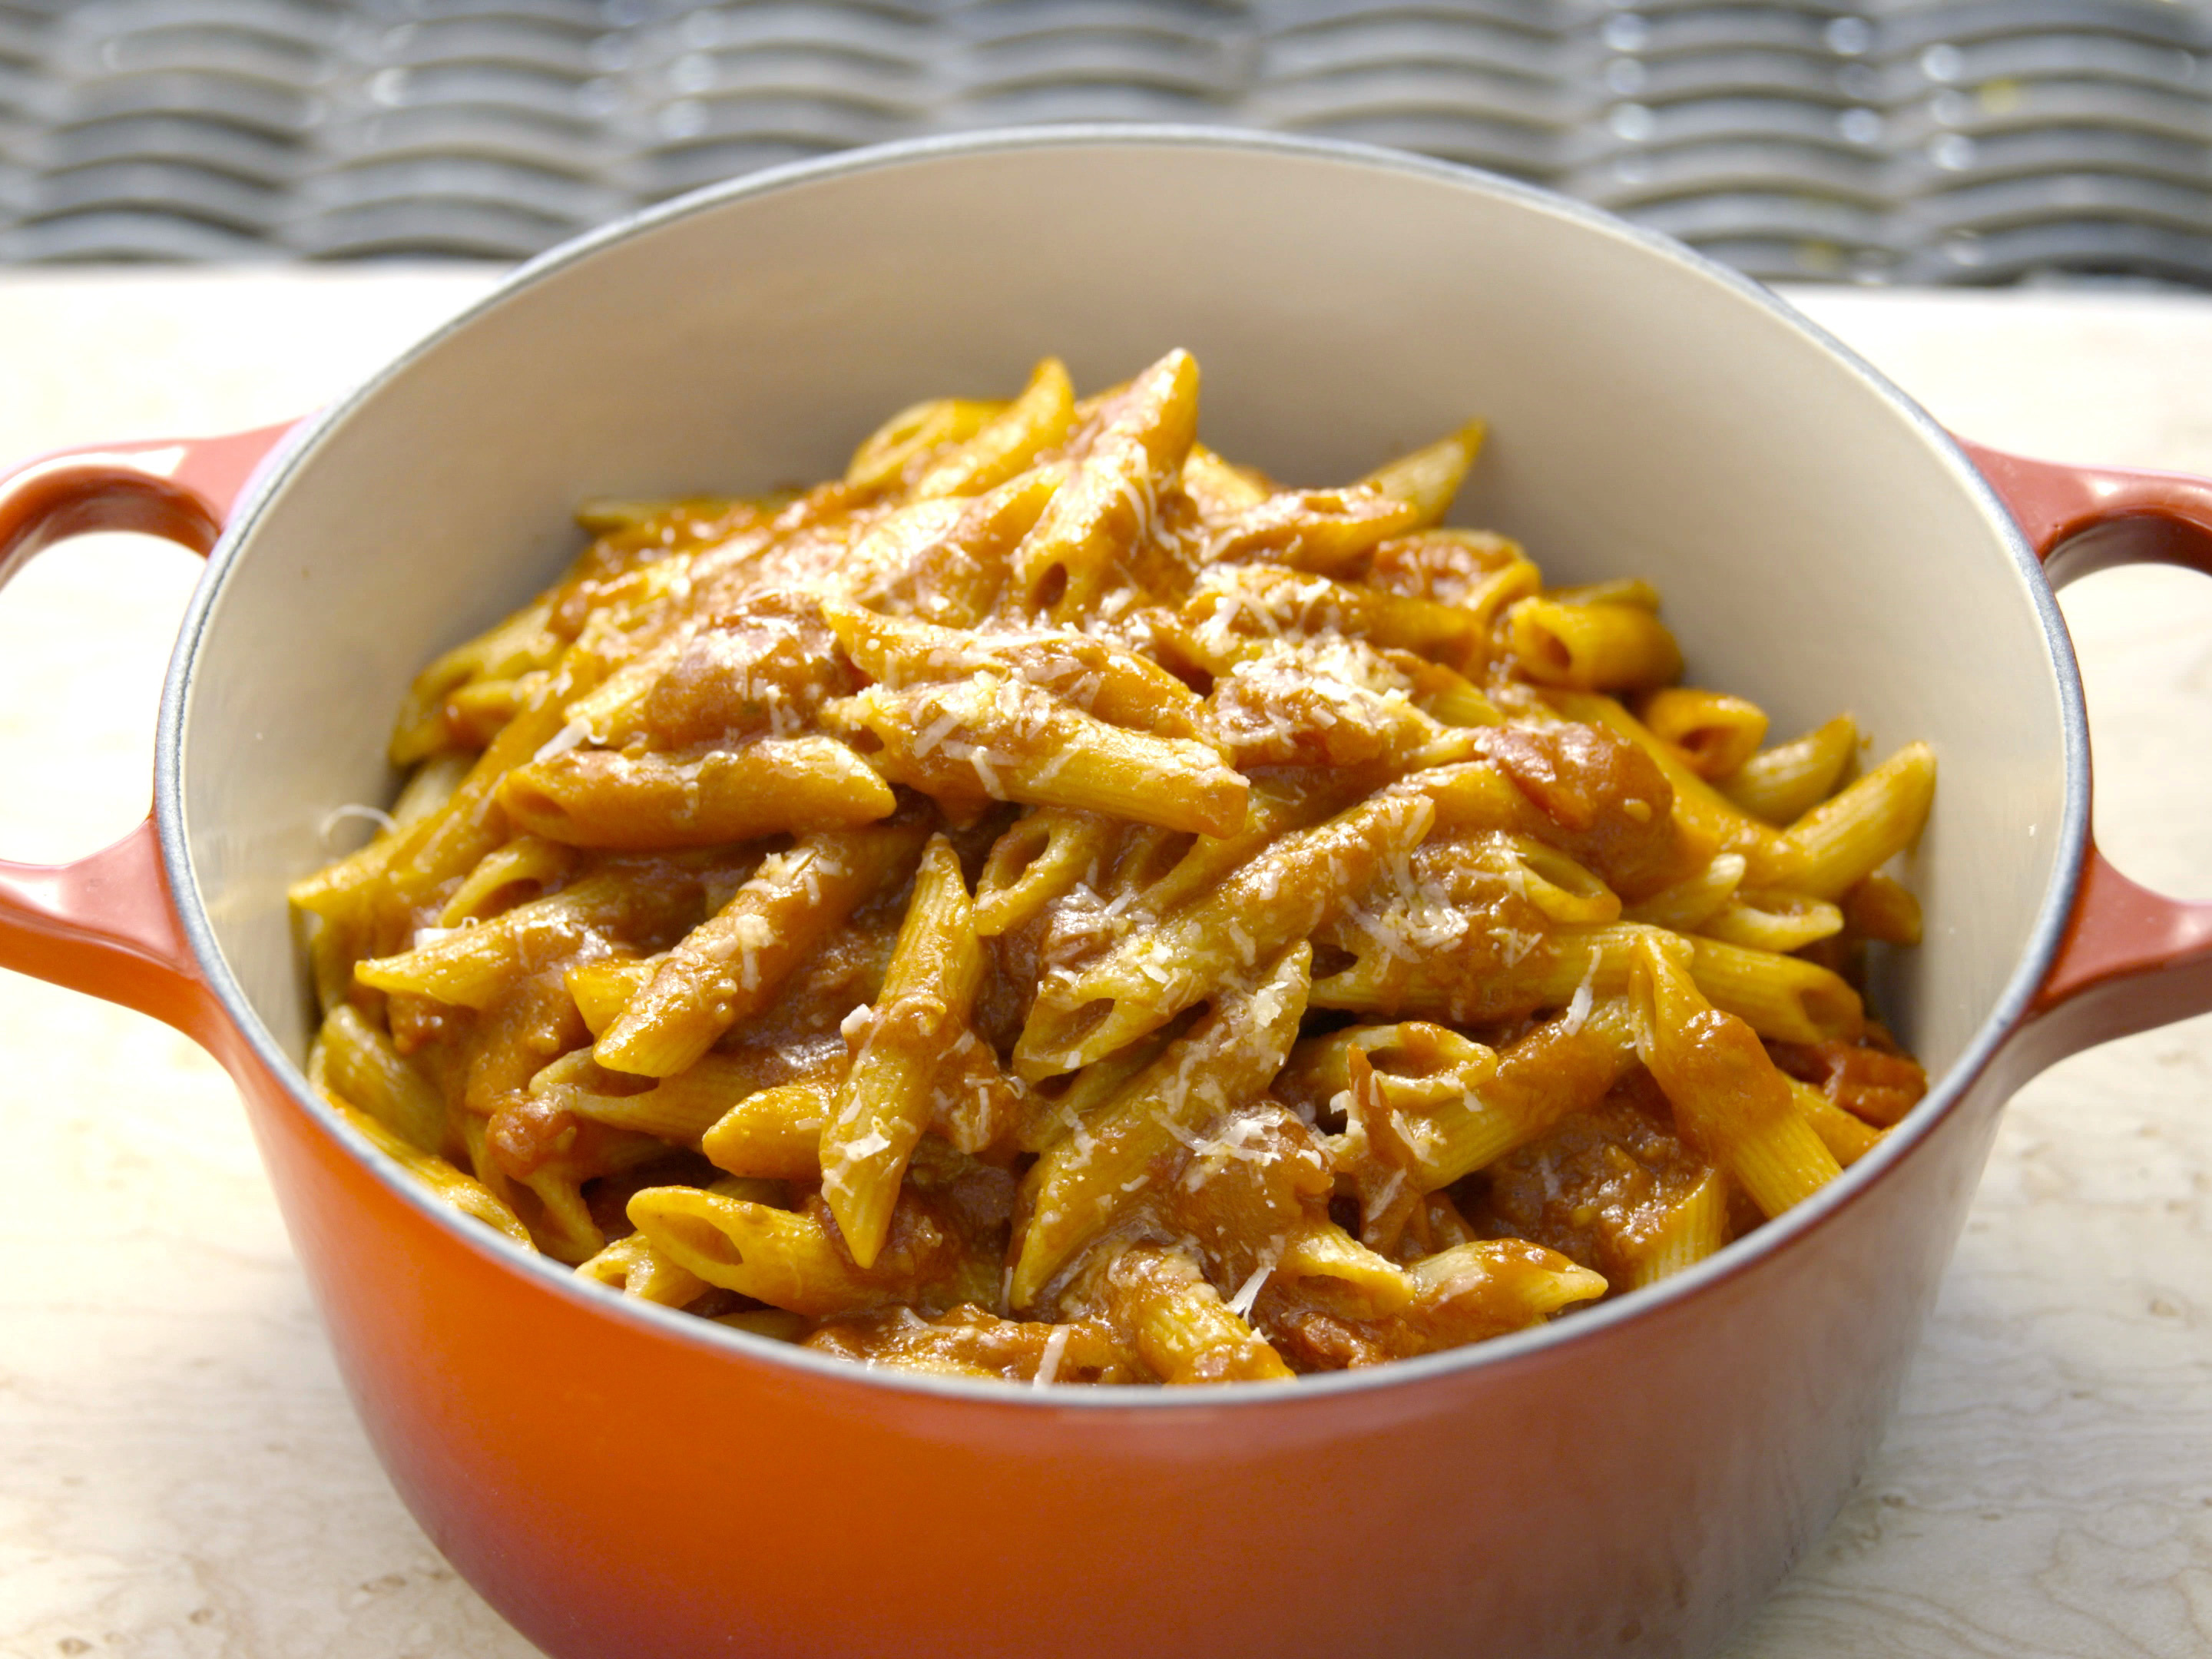 Basic Parmesan Pomodoro Recipe, Giada De Laurentiis